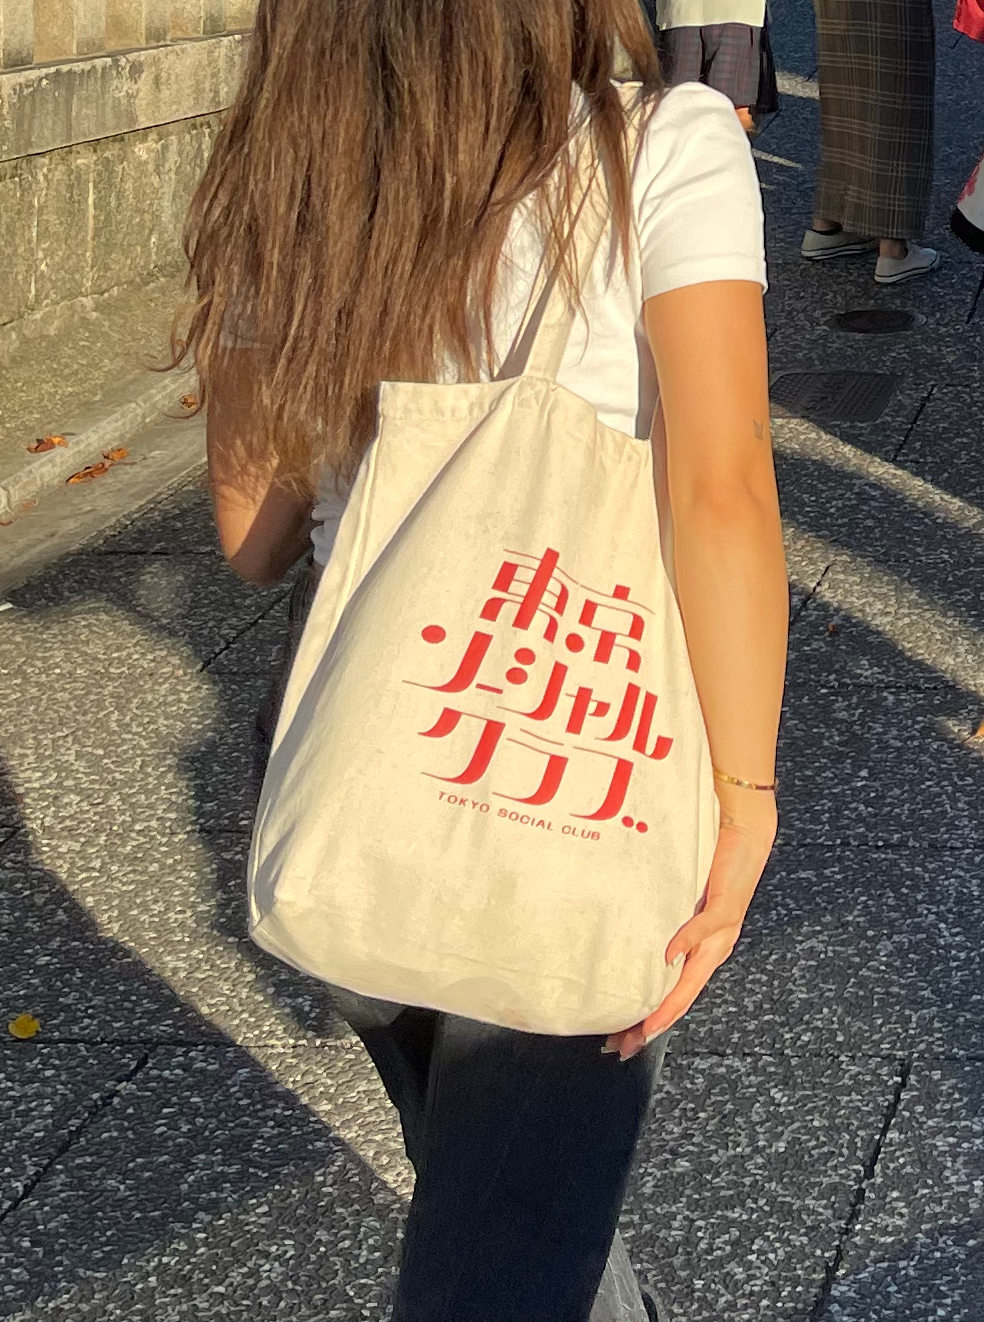 Tokyo Social Club Tote Bag